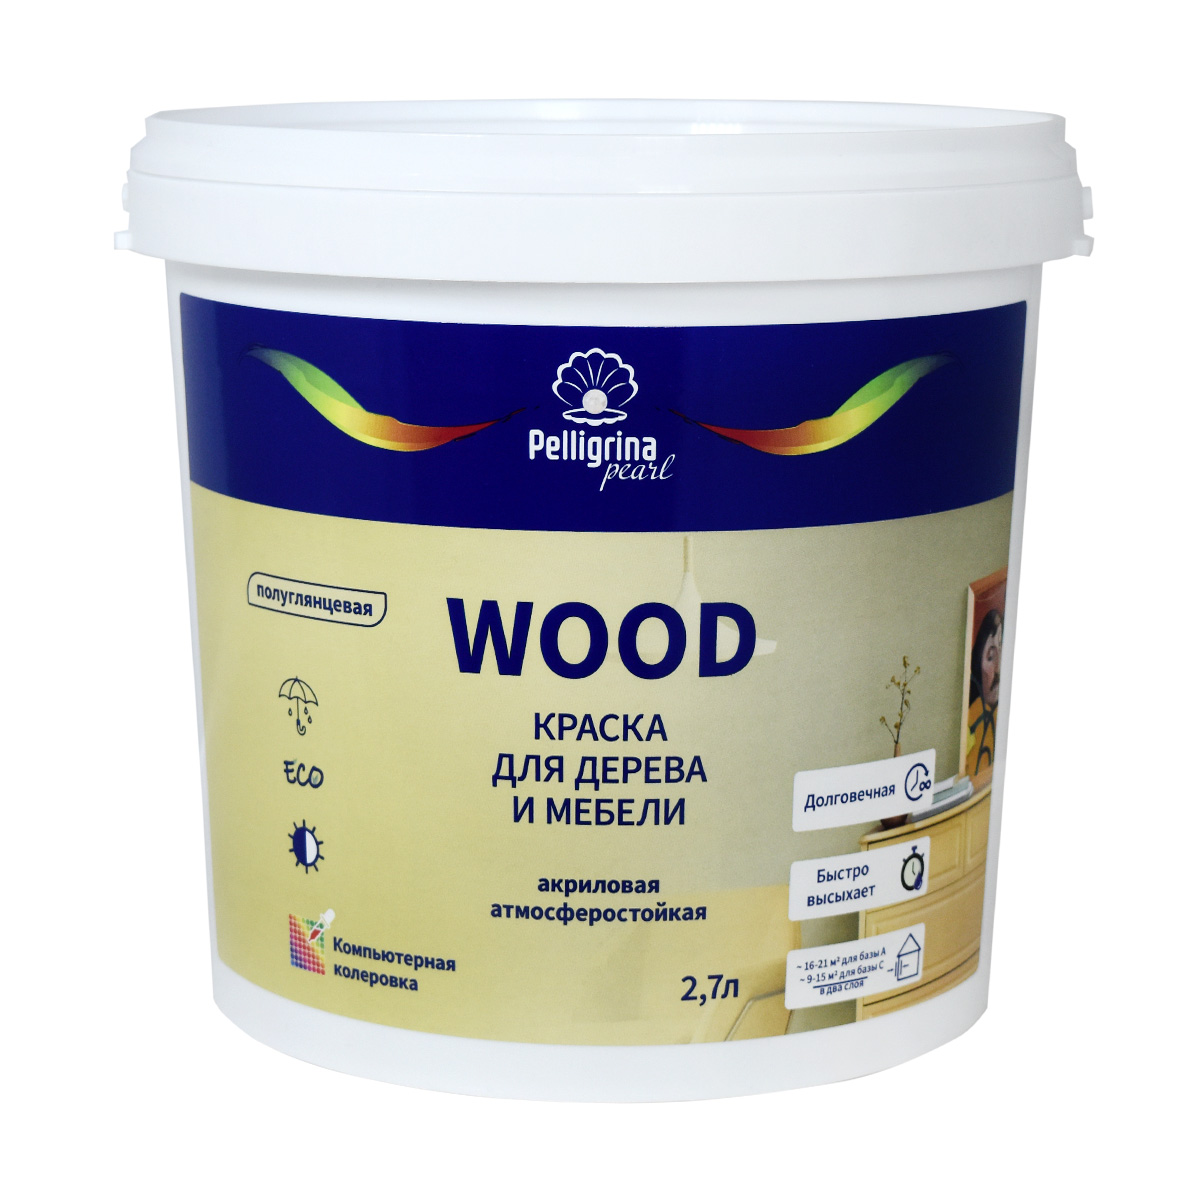 Краска для дерева и мебели Pelligrina Pearl Wood, акриловая, база A, белая, 2,7 л усиленная смывка для краски с дерева telakka wood pro 5 кг